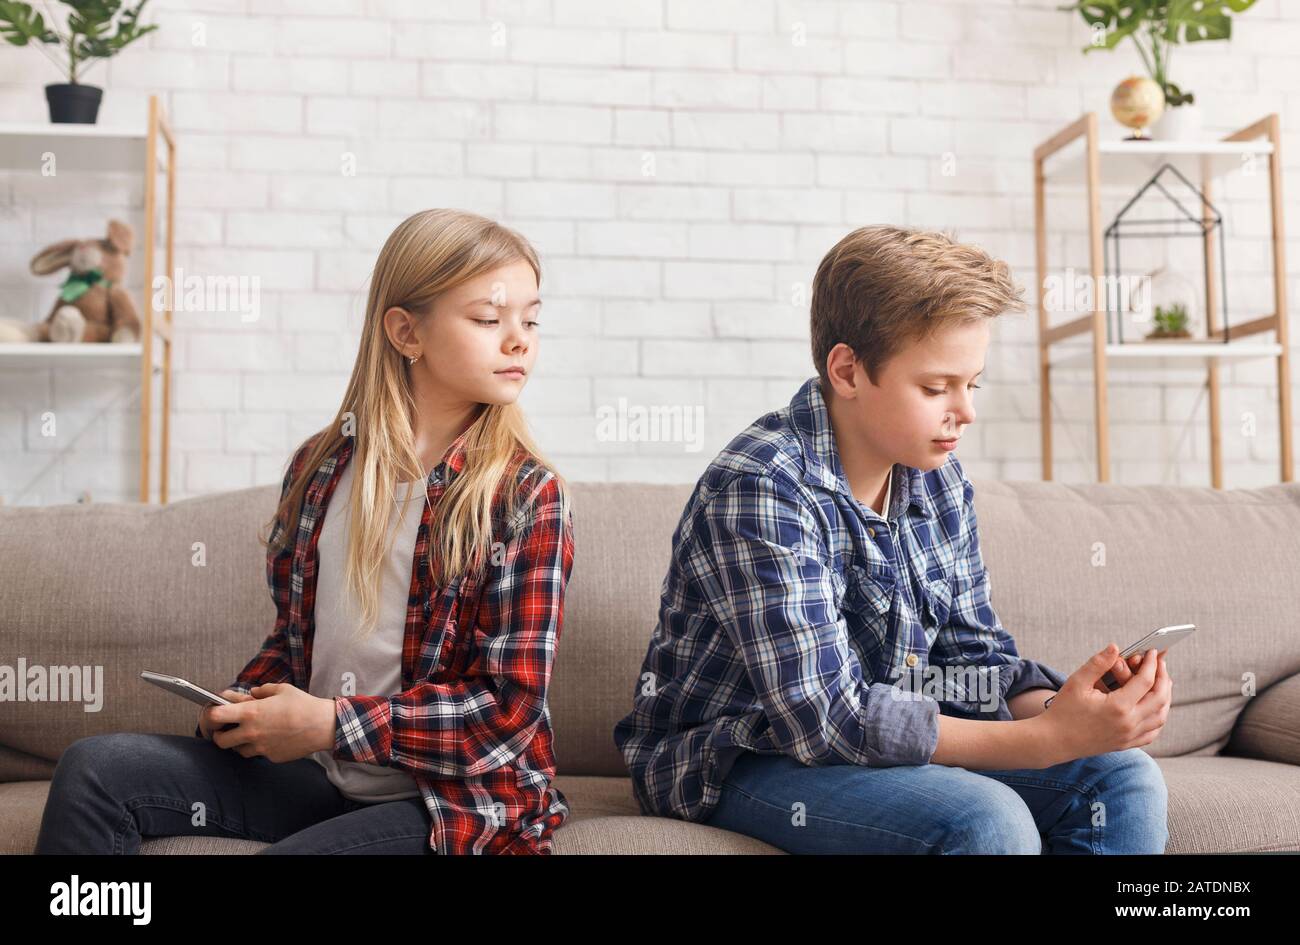 Girl Using Smartphone Peeking At Boy's Chat Sitting On Sofa Stock Photo